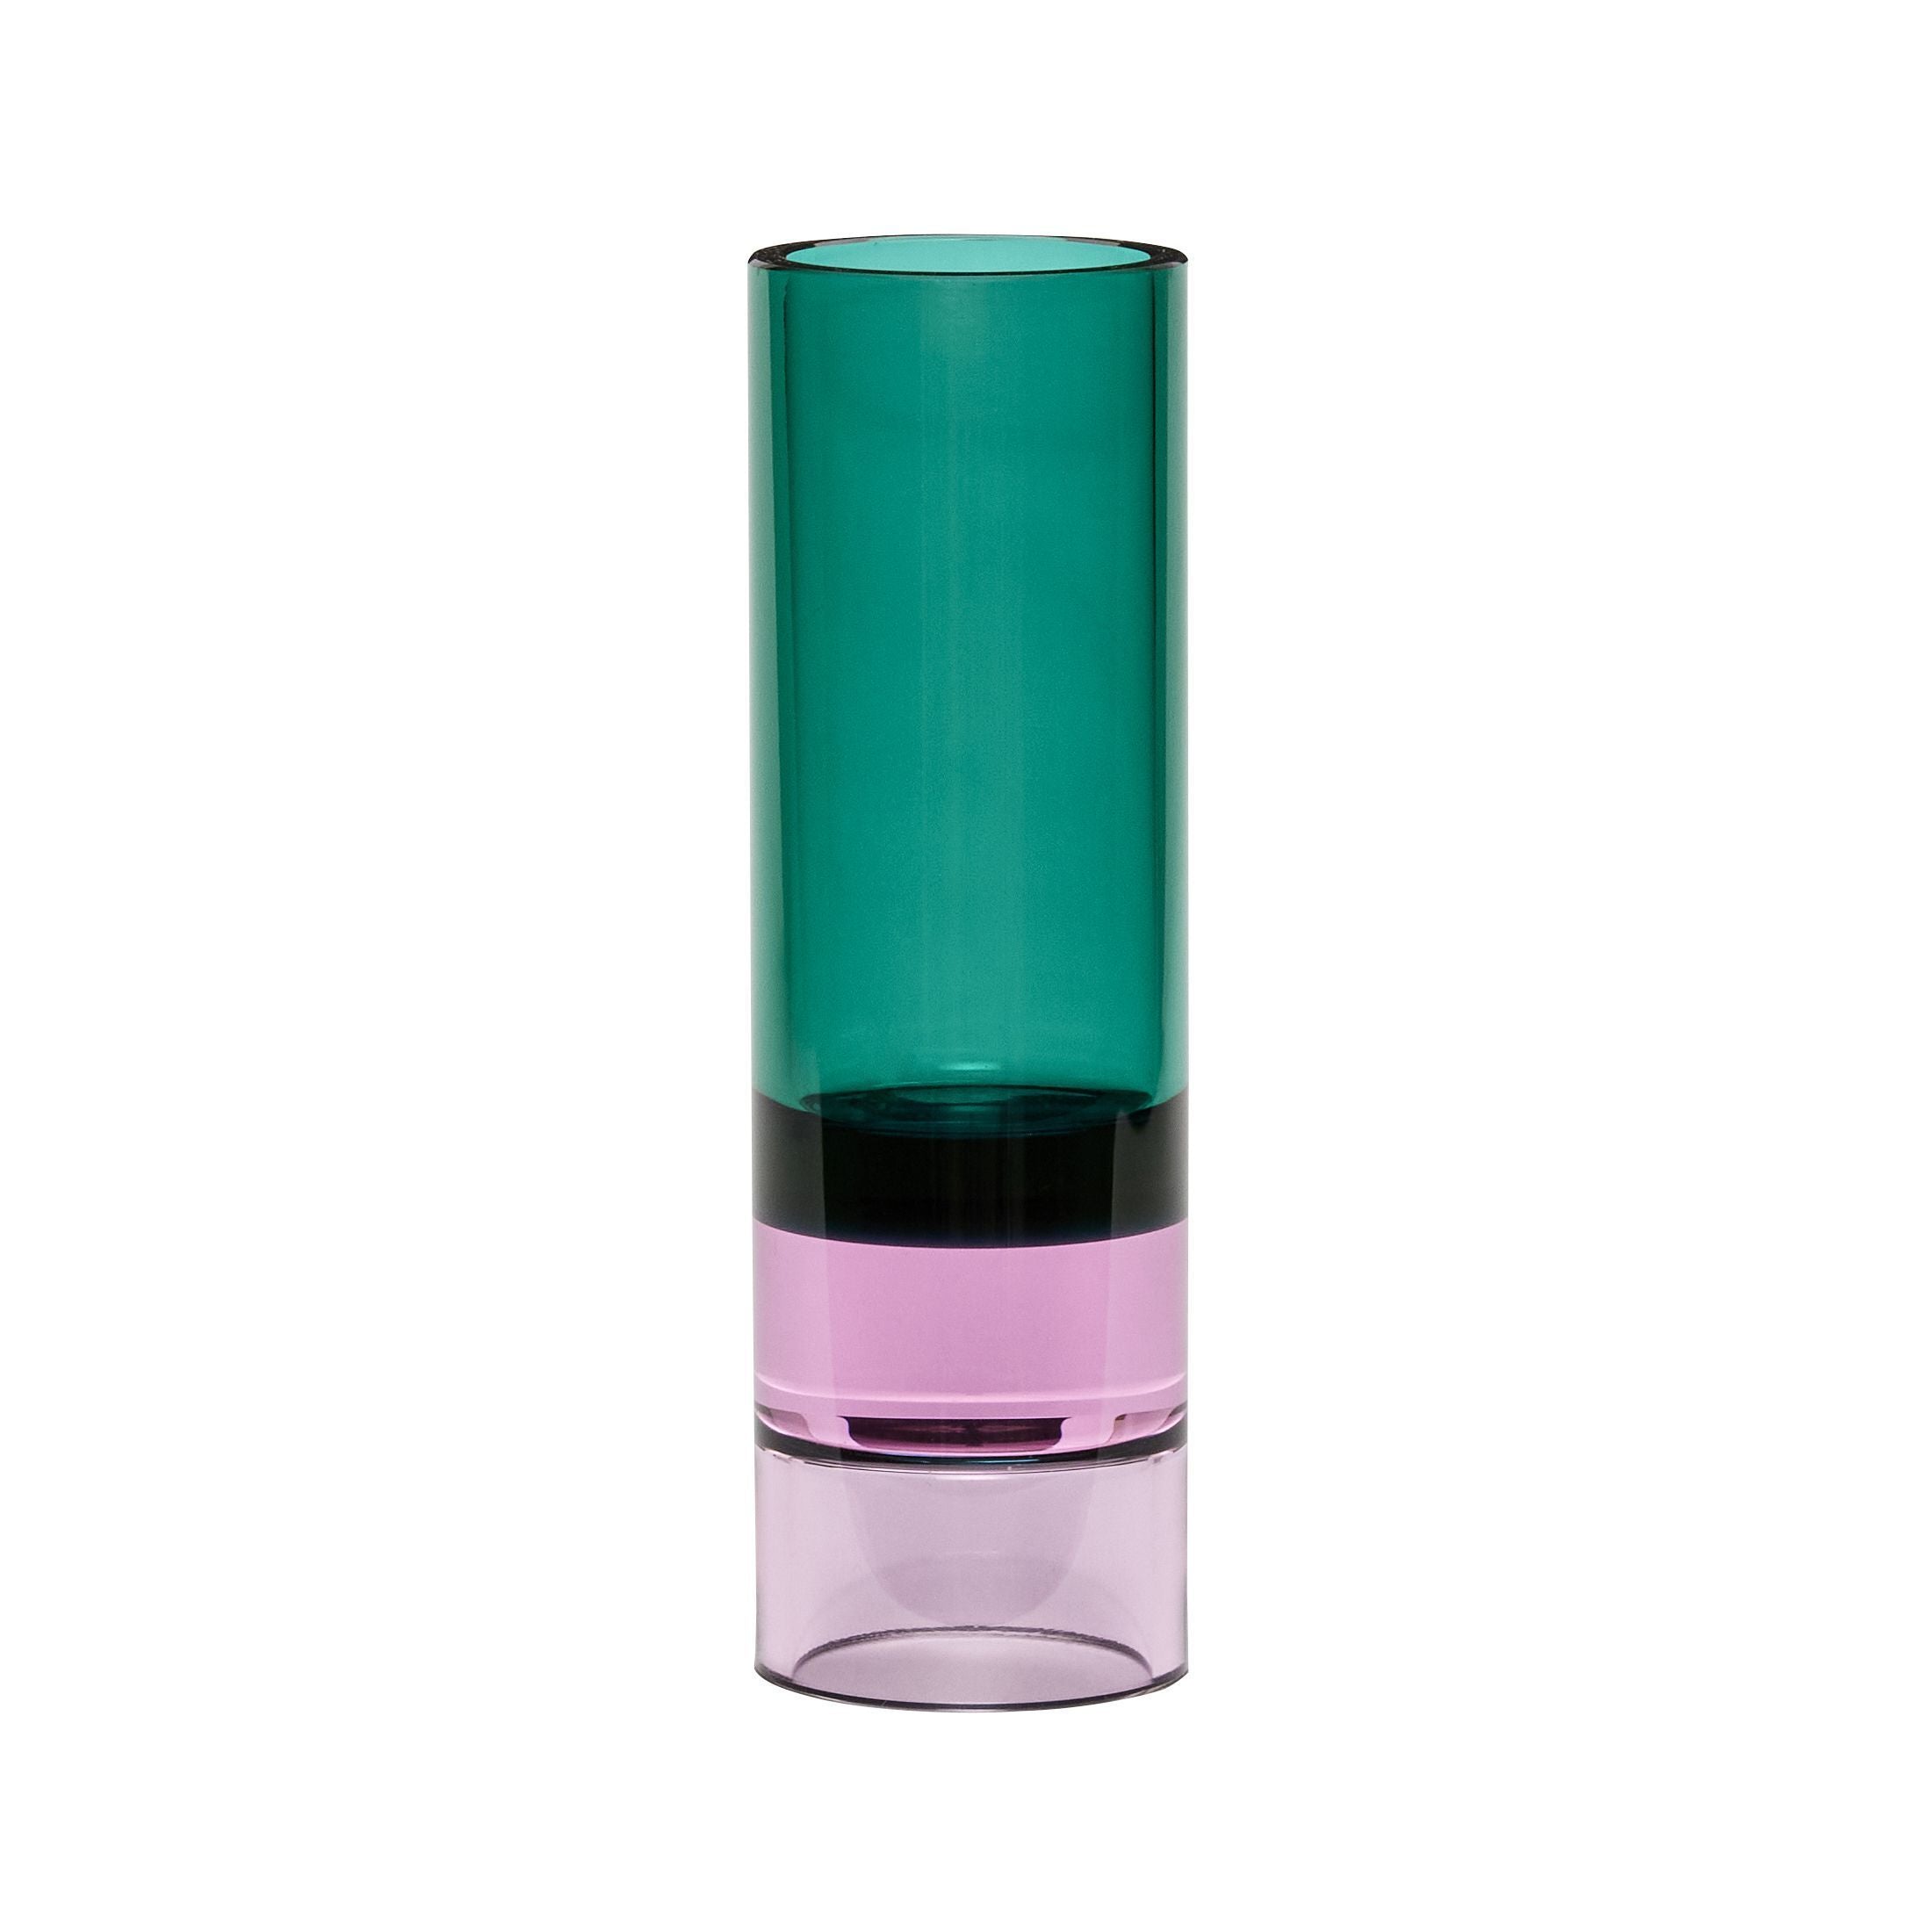 HübschAstro Tealight持有者水晶，绿色/粉红色